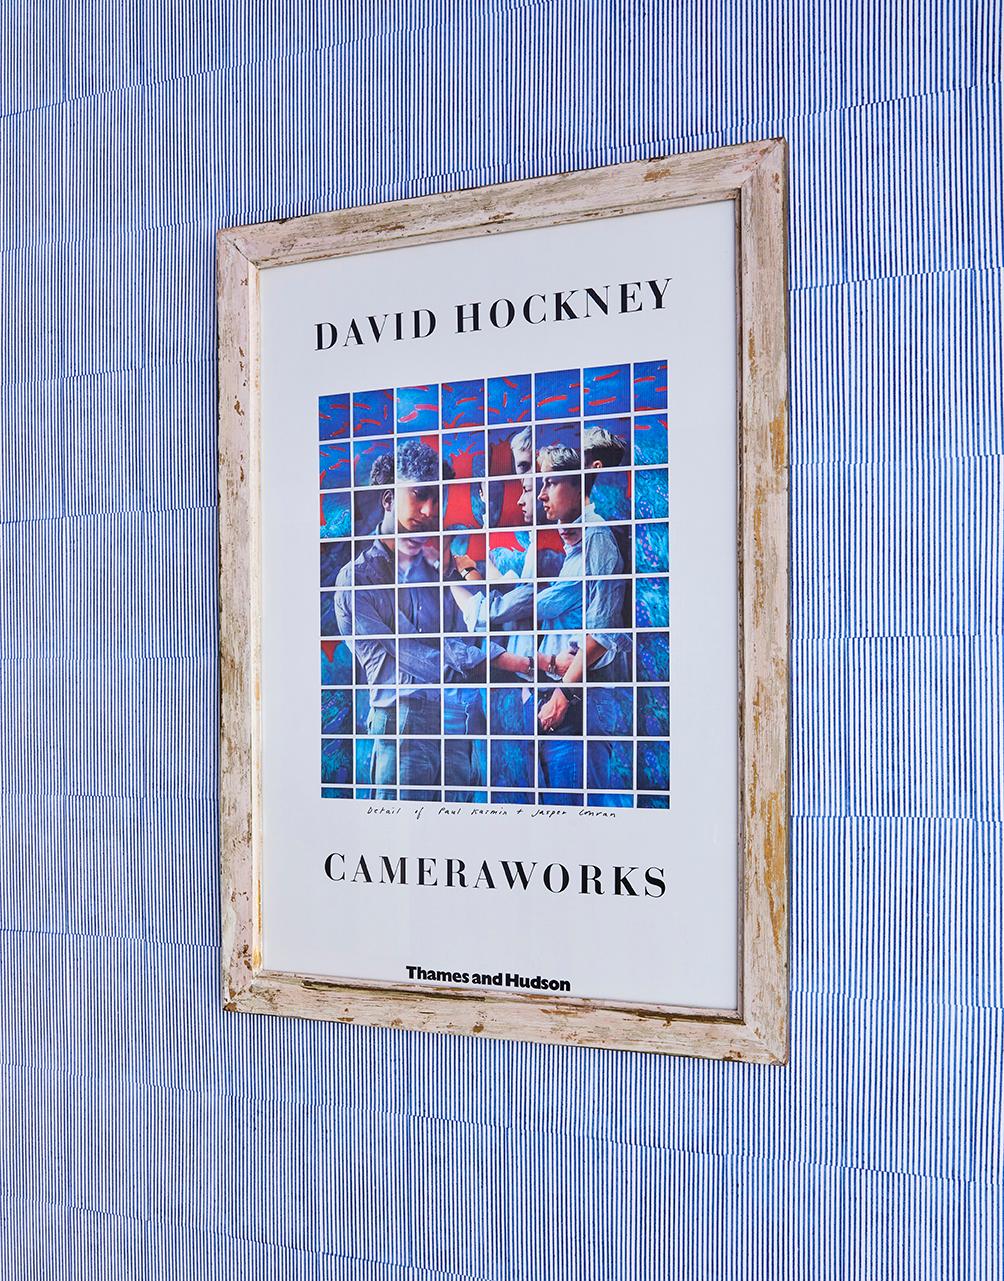 David Hockney
England, 1982

Vintage exhibition poster 